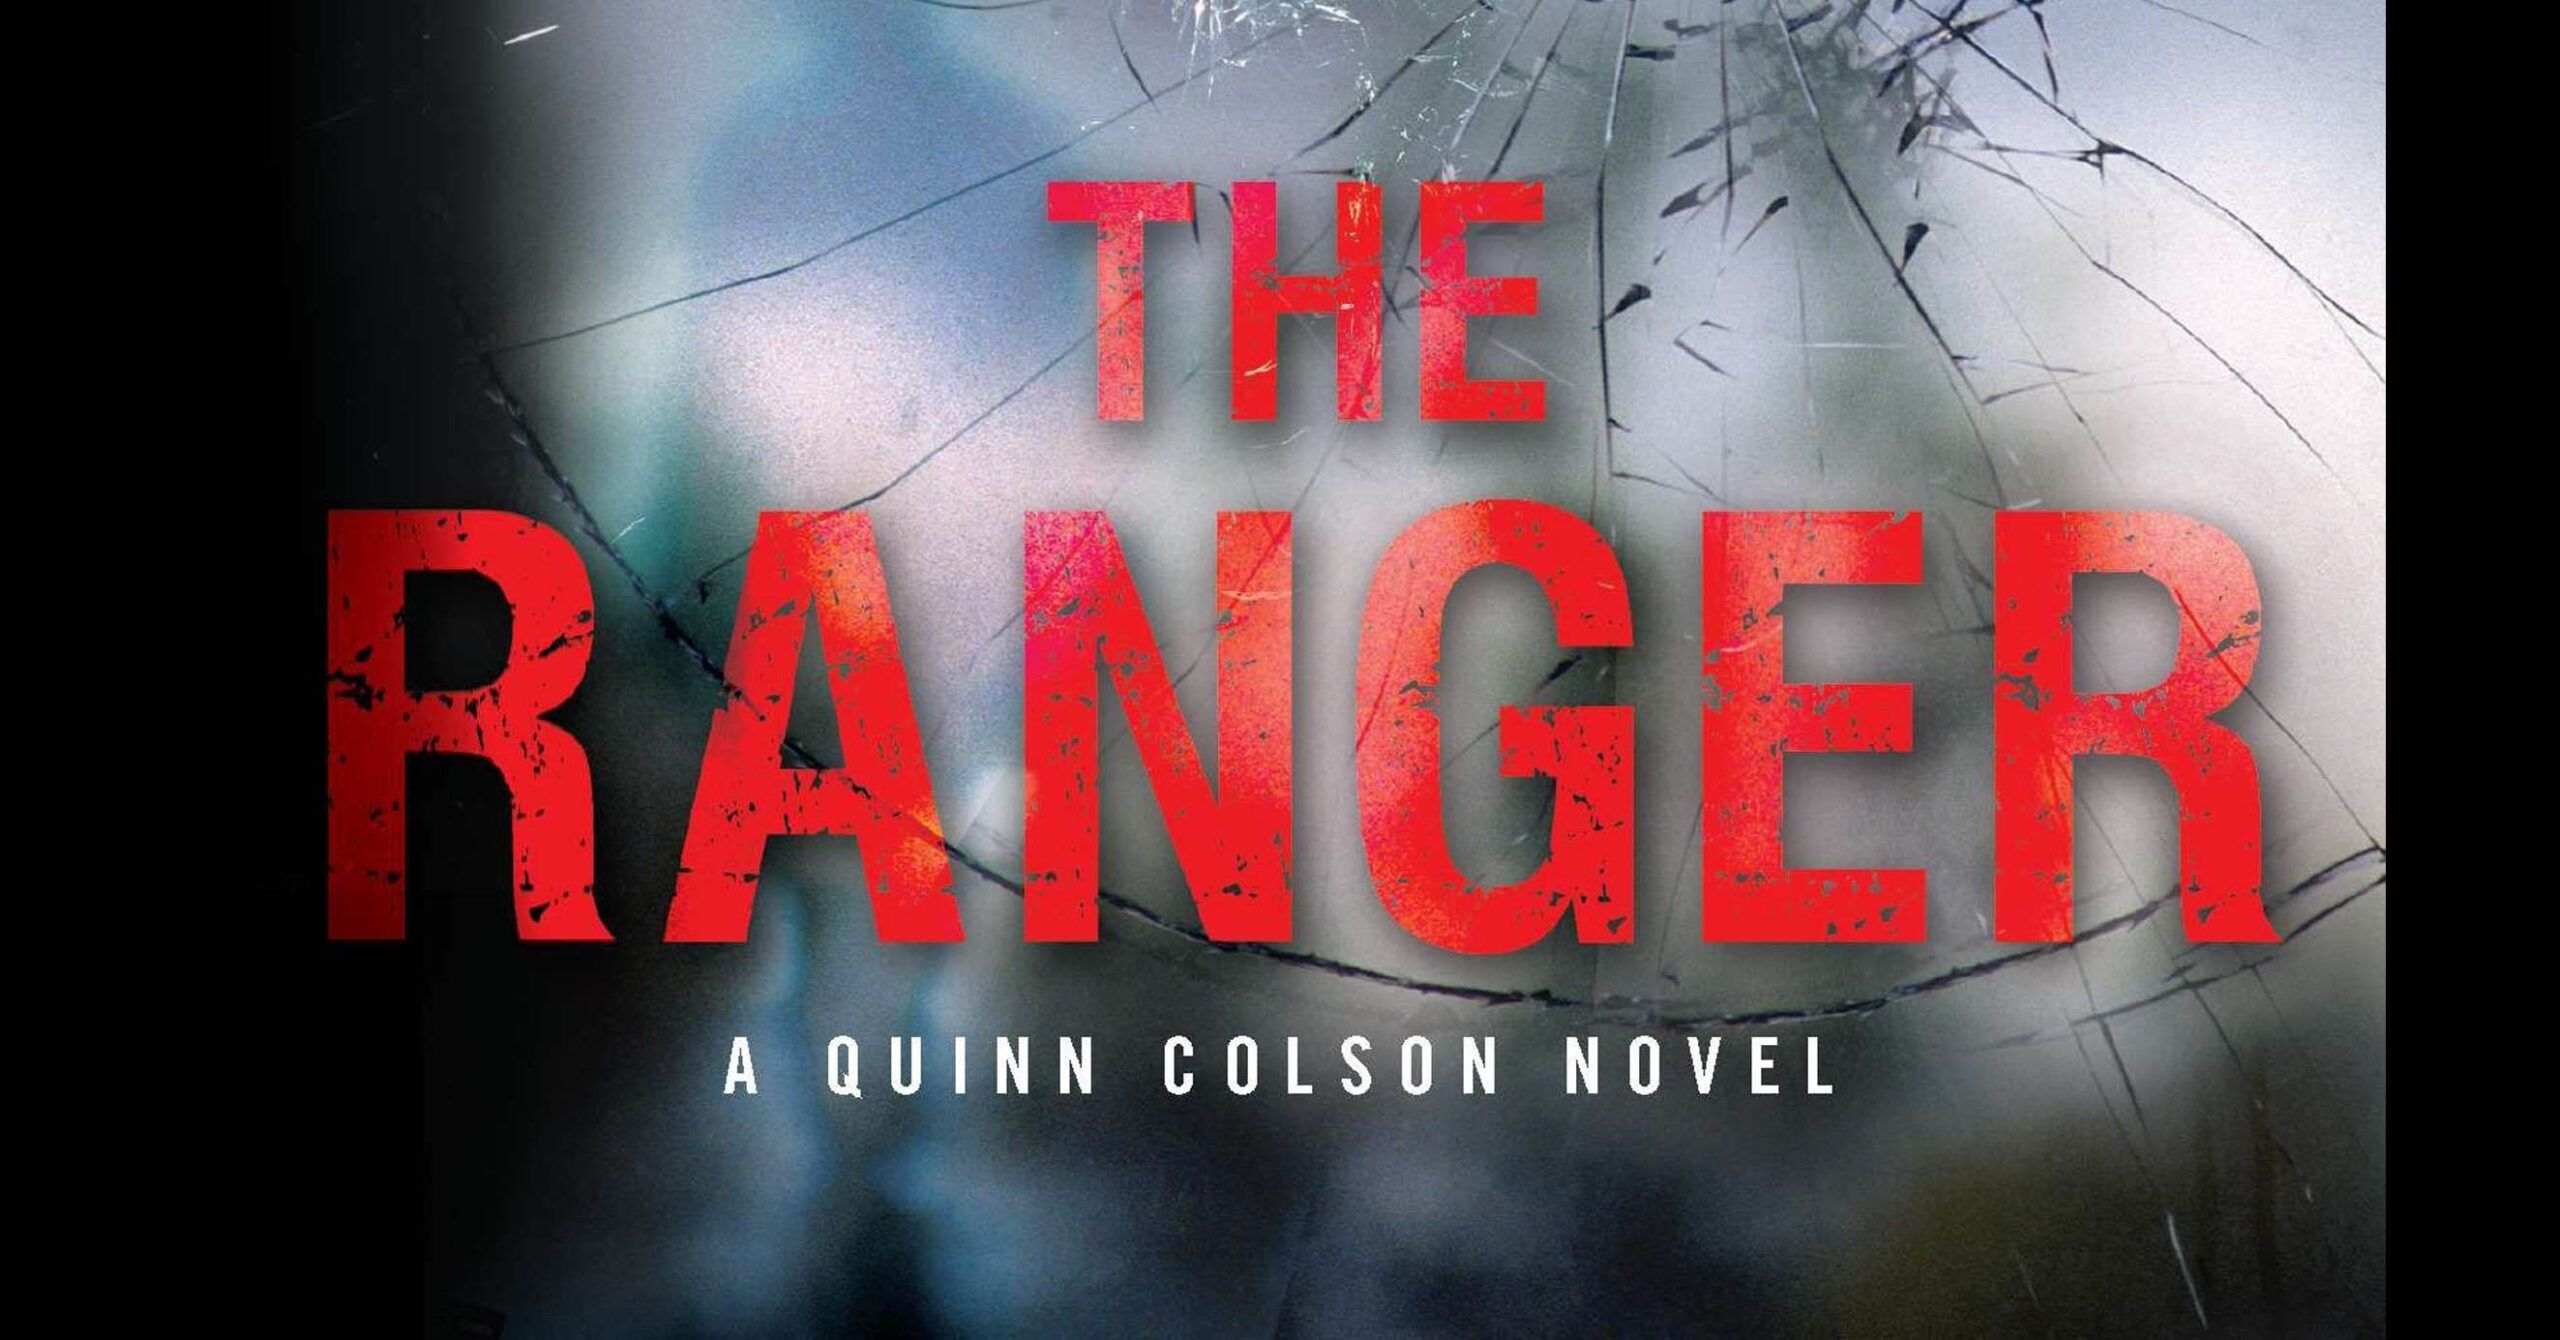 The Ranger audiobook – Quinn Colson, Book 1